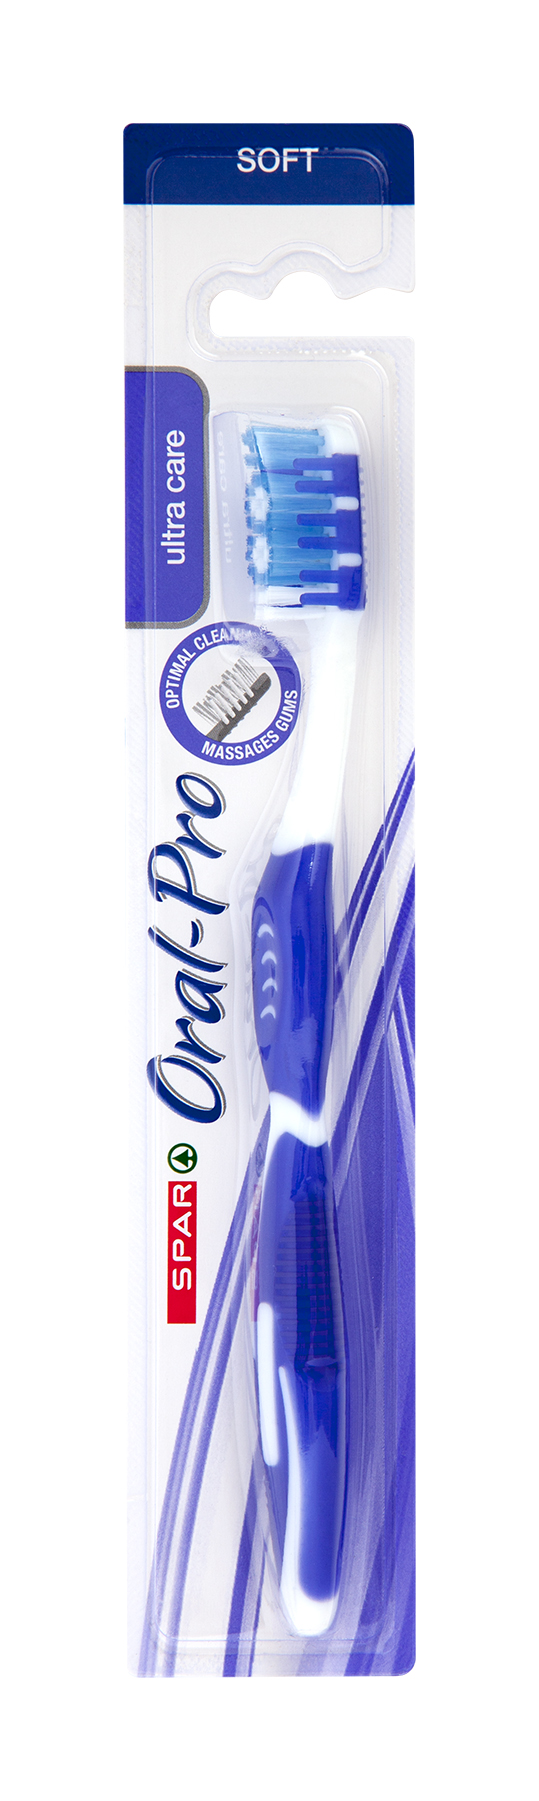 oral pro toothbrush ulta care - soft